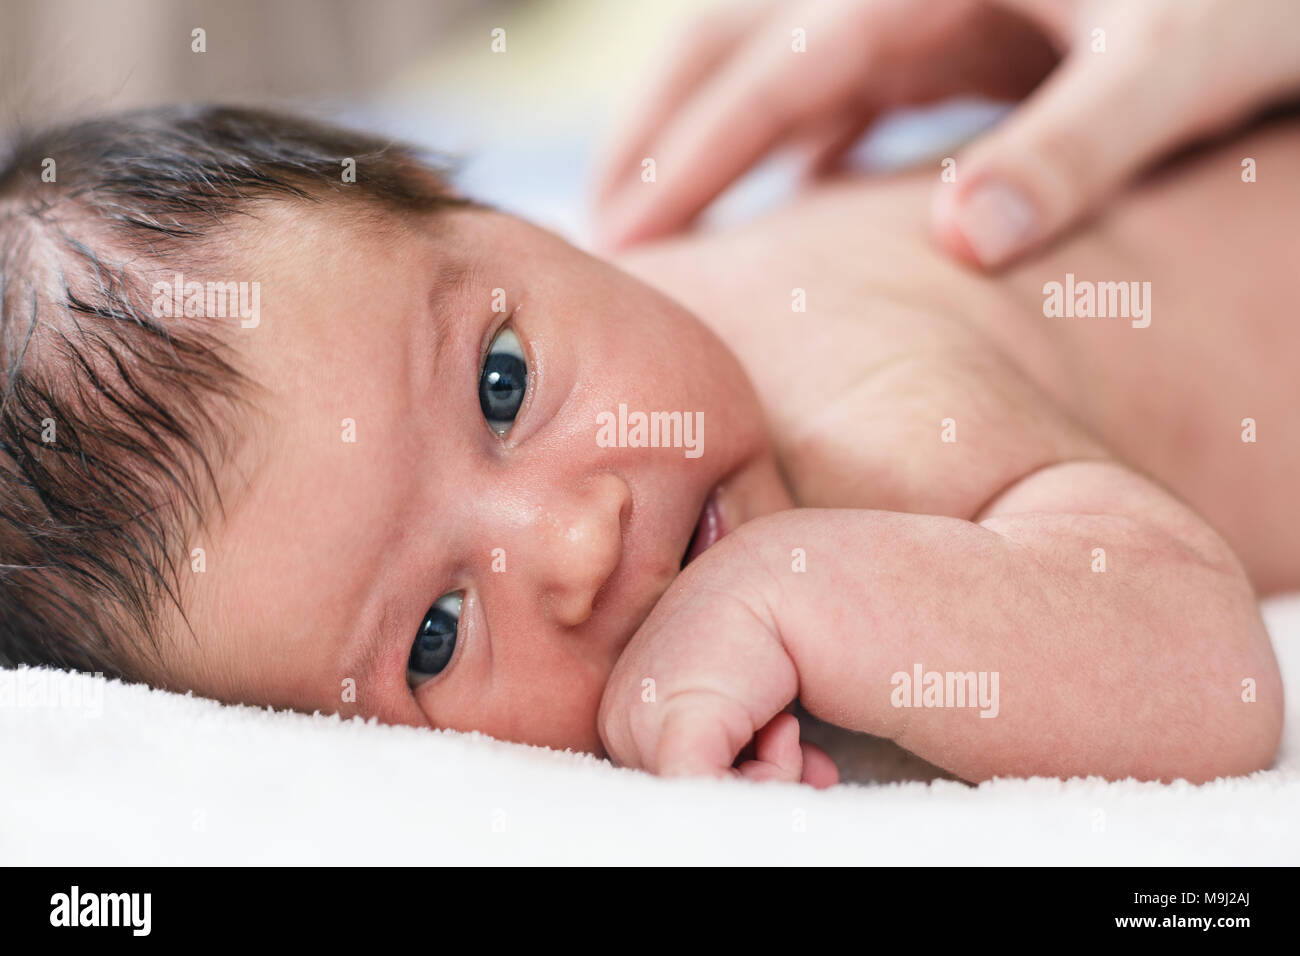 Cute newborn baby looking at the camera. Stock Photo